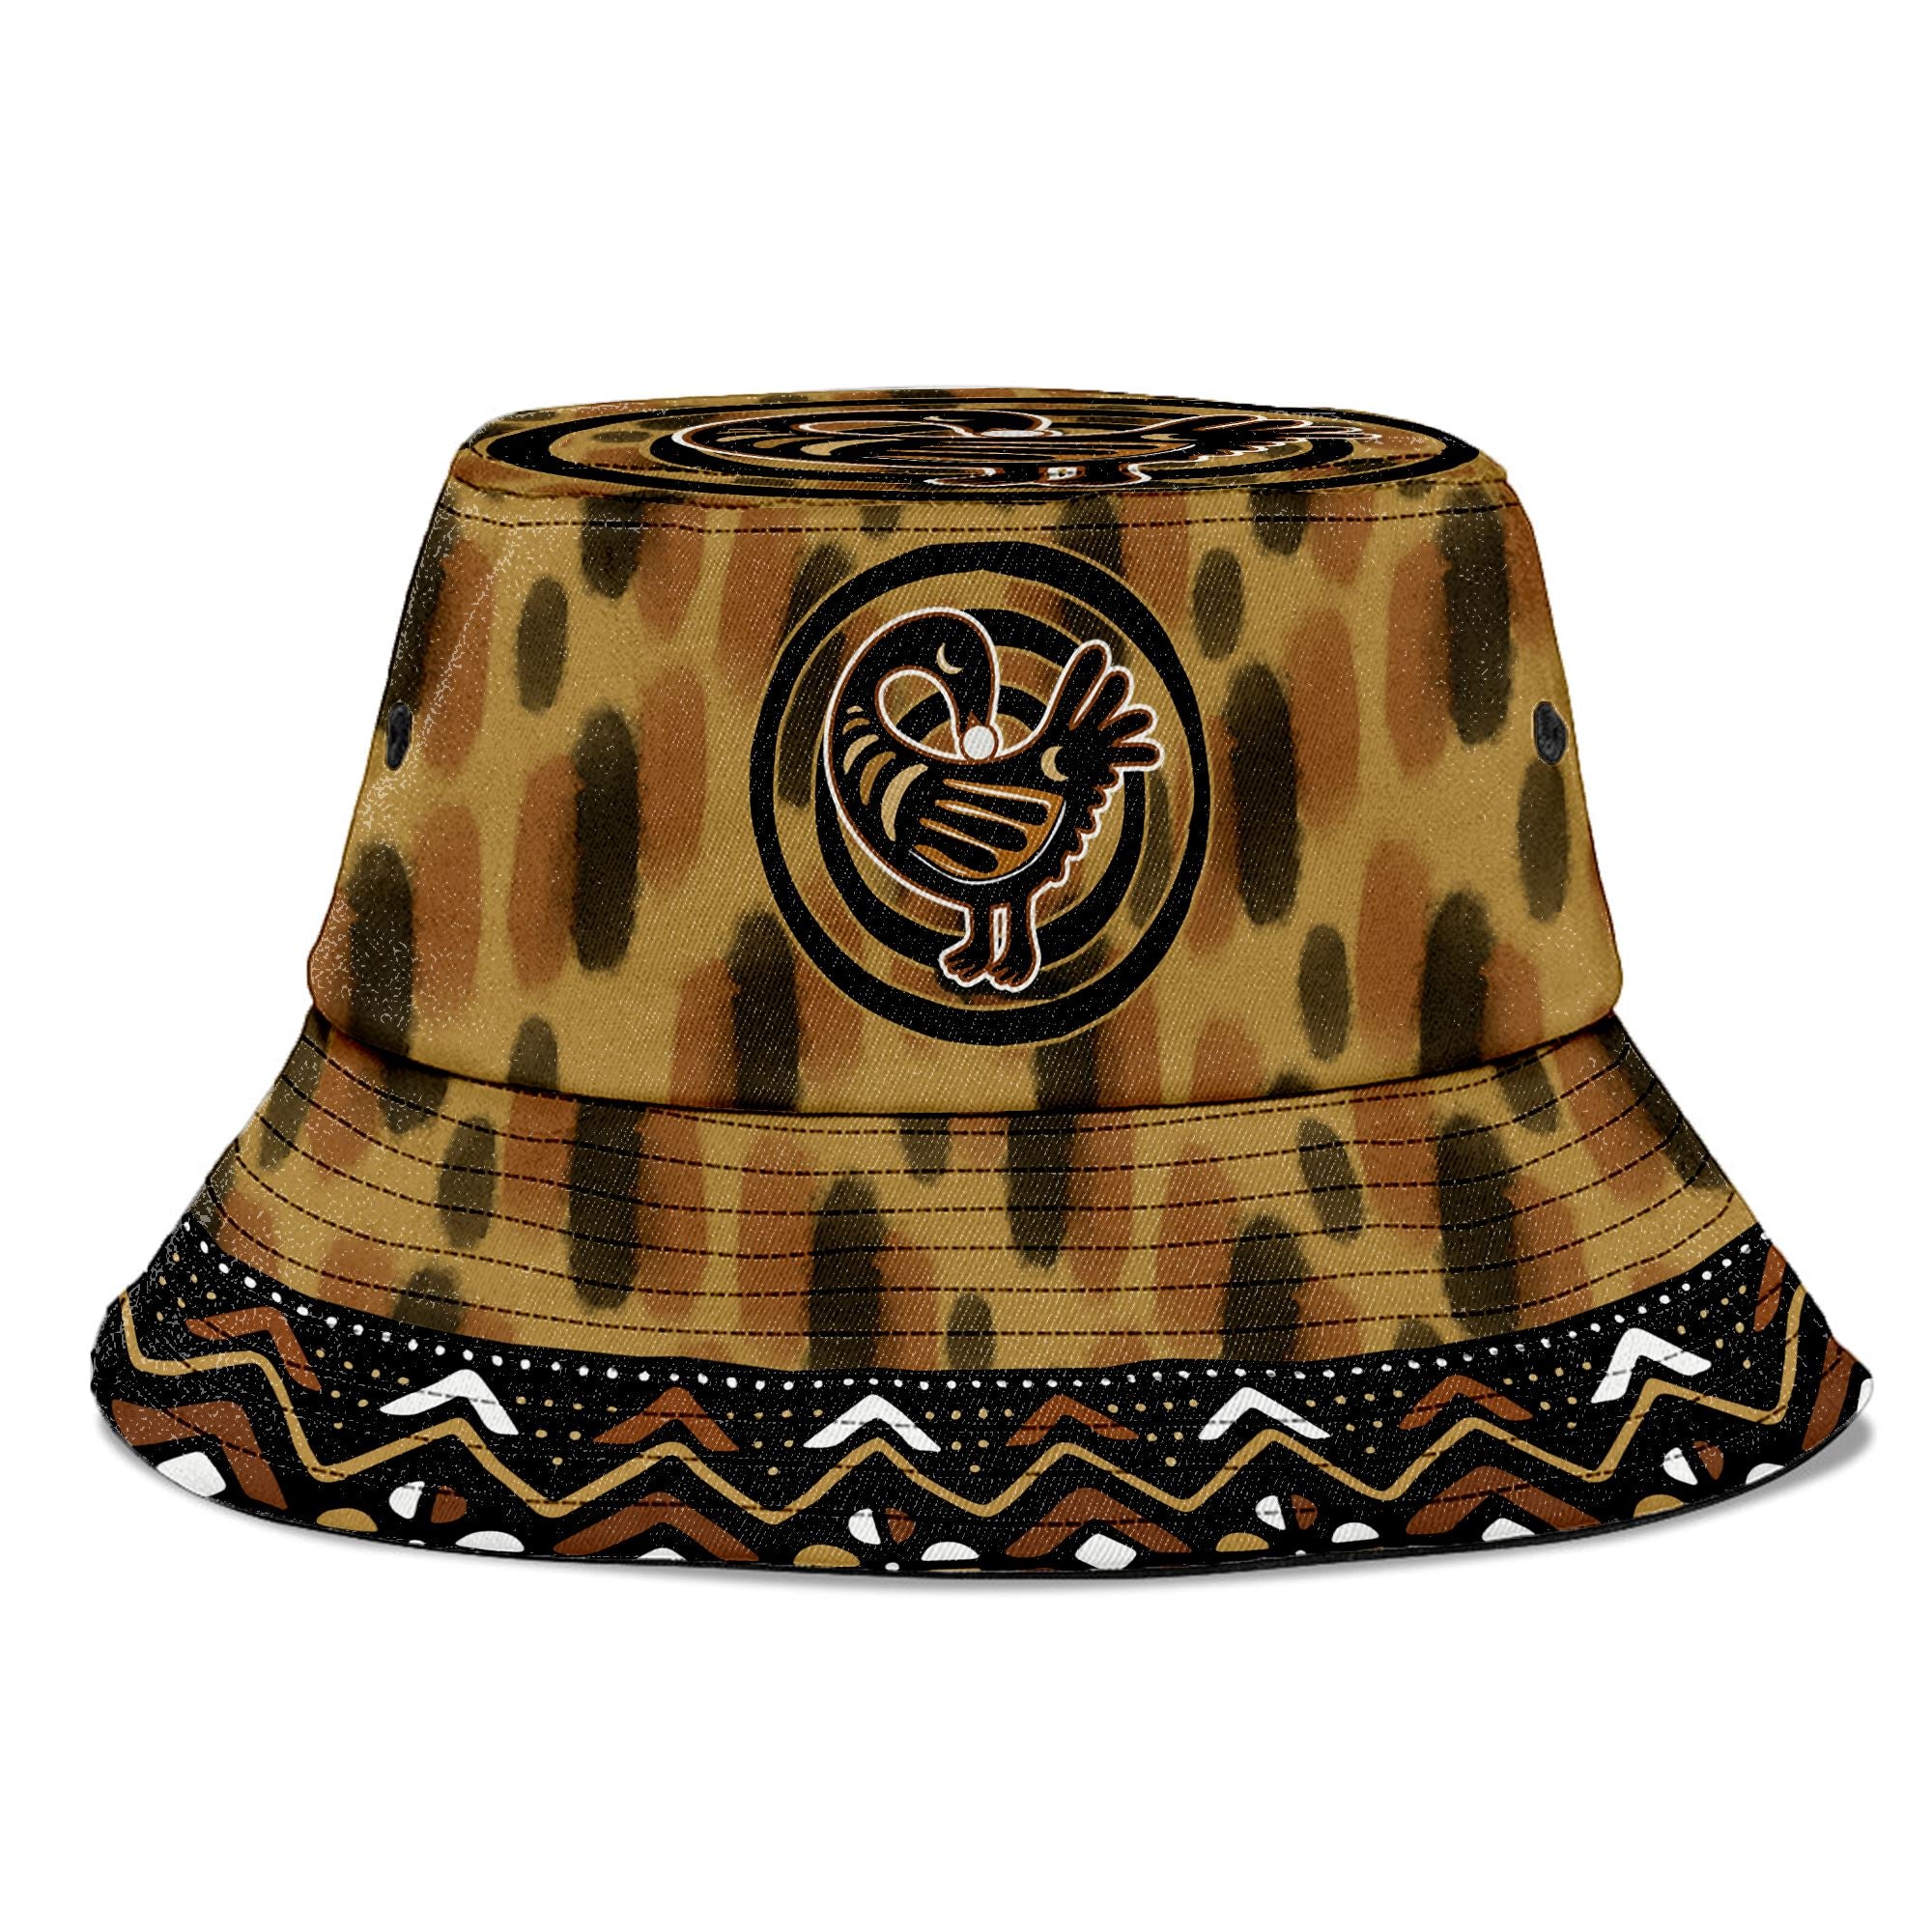 Printed Mud Cloth and Adinkra Symbol Bucket Hat Bucket Hat Tianci 